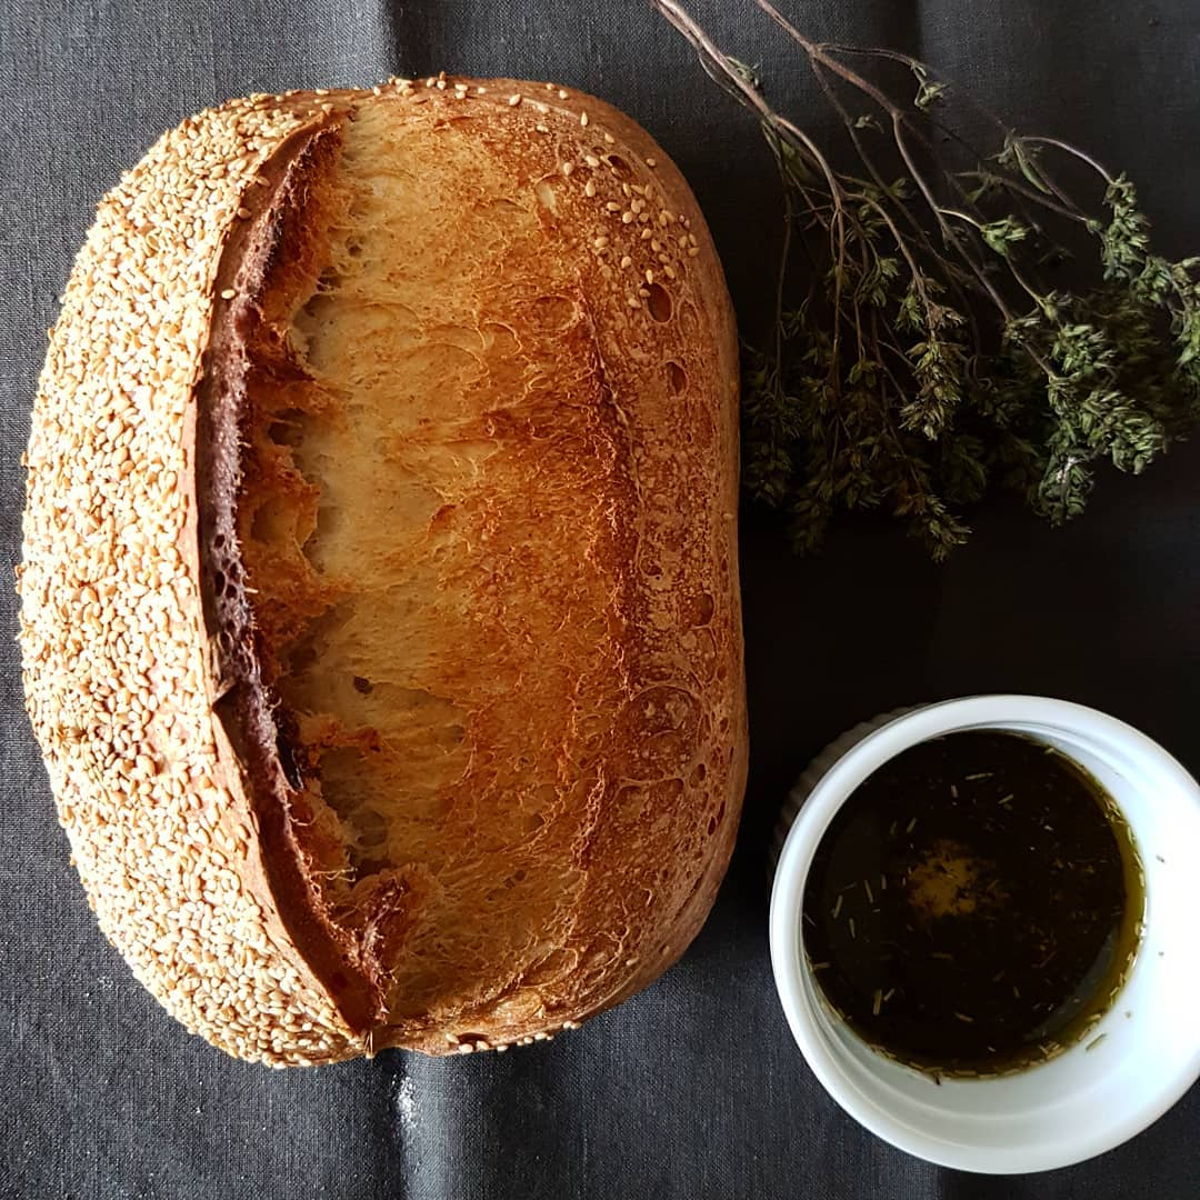 Learn to make sourdough bread